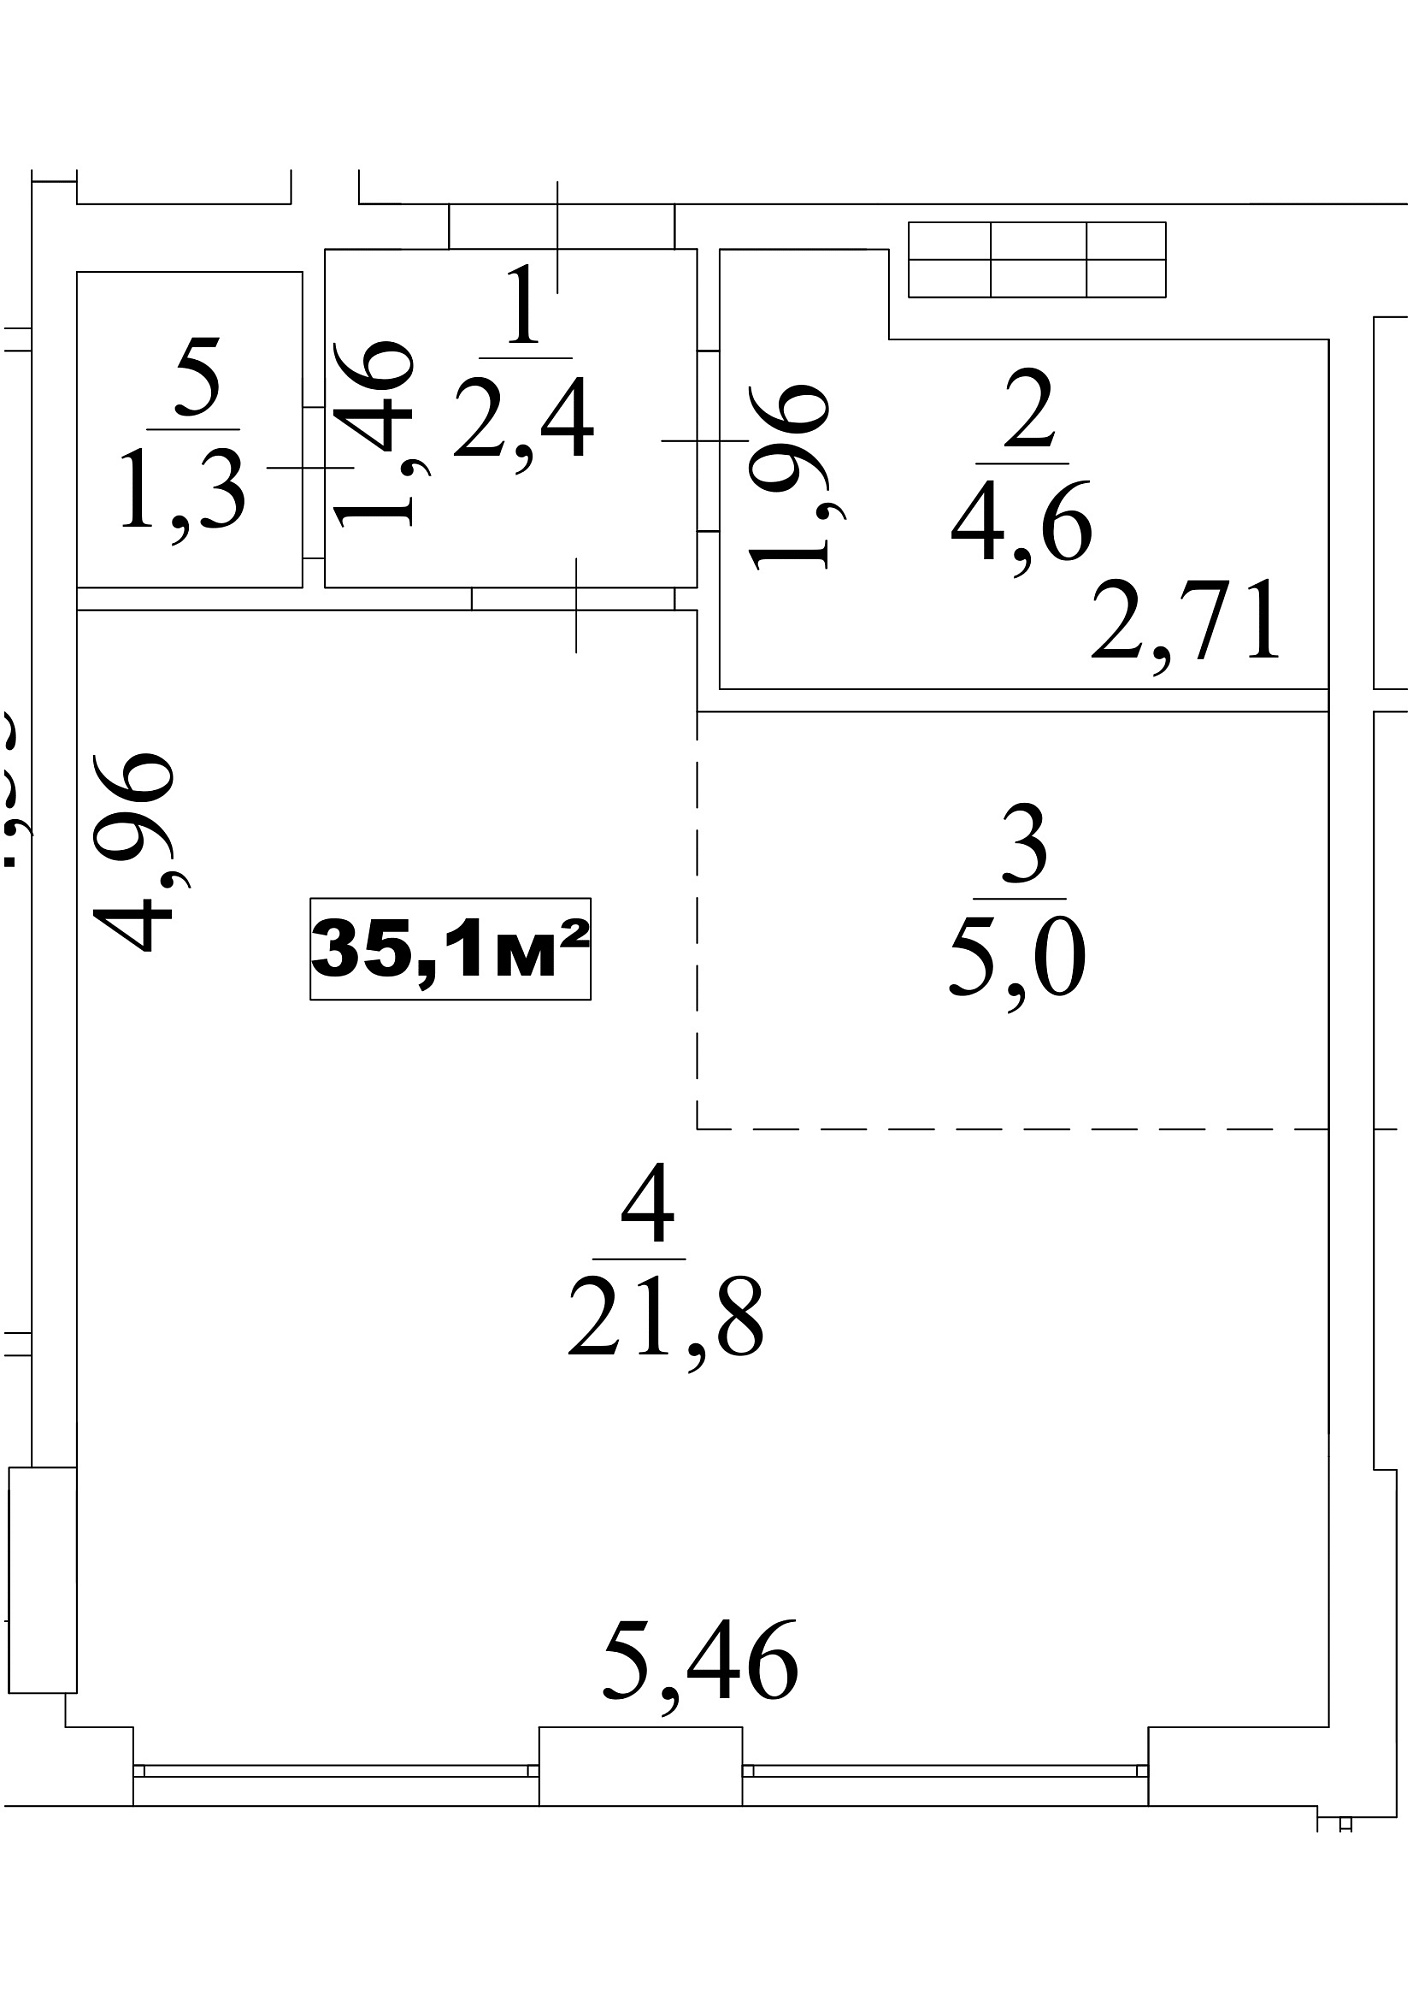 Planning Smart flats area 35.1m2, AB-10-08/00065.